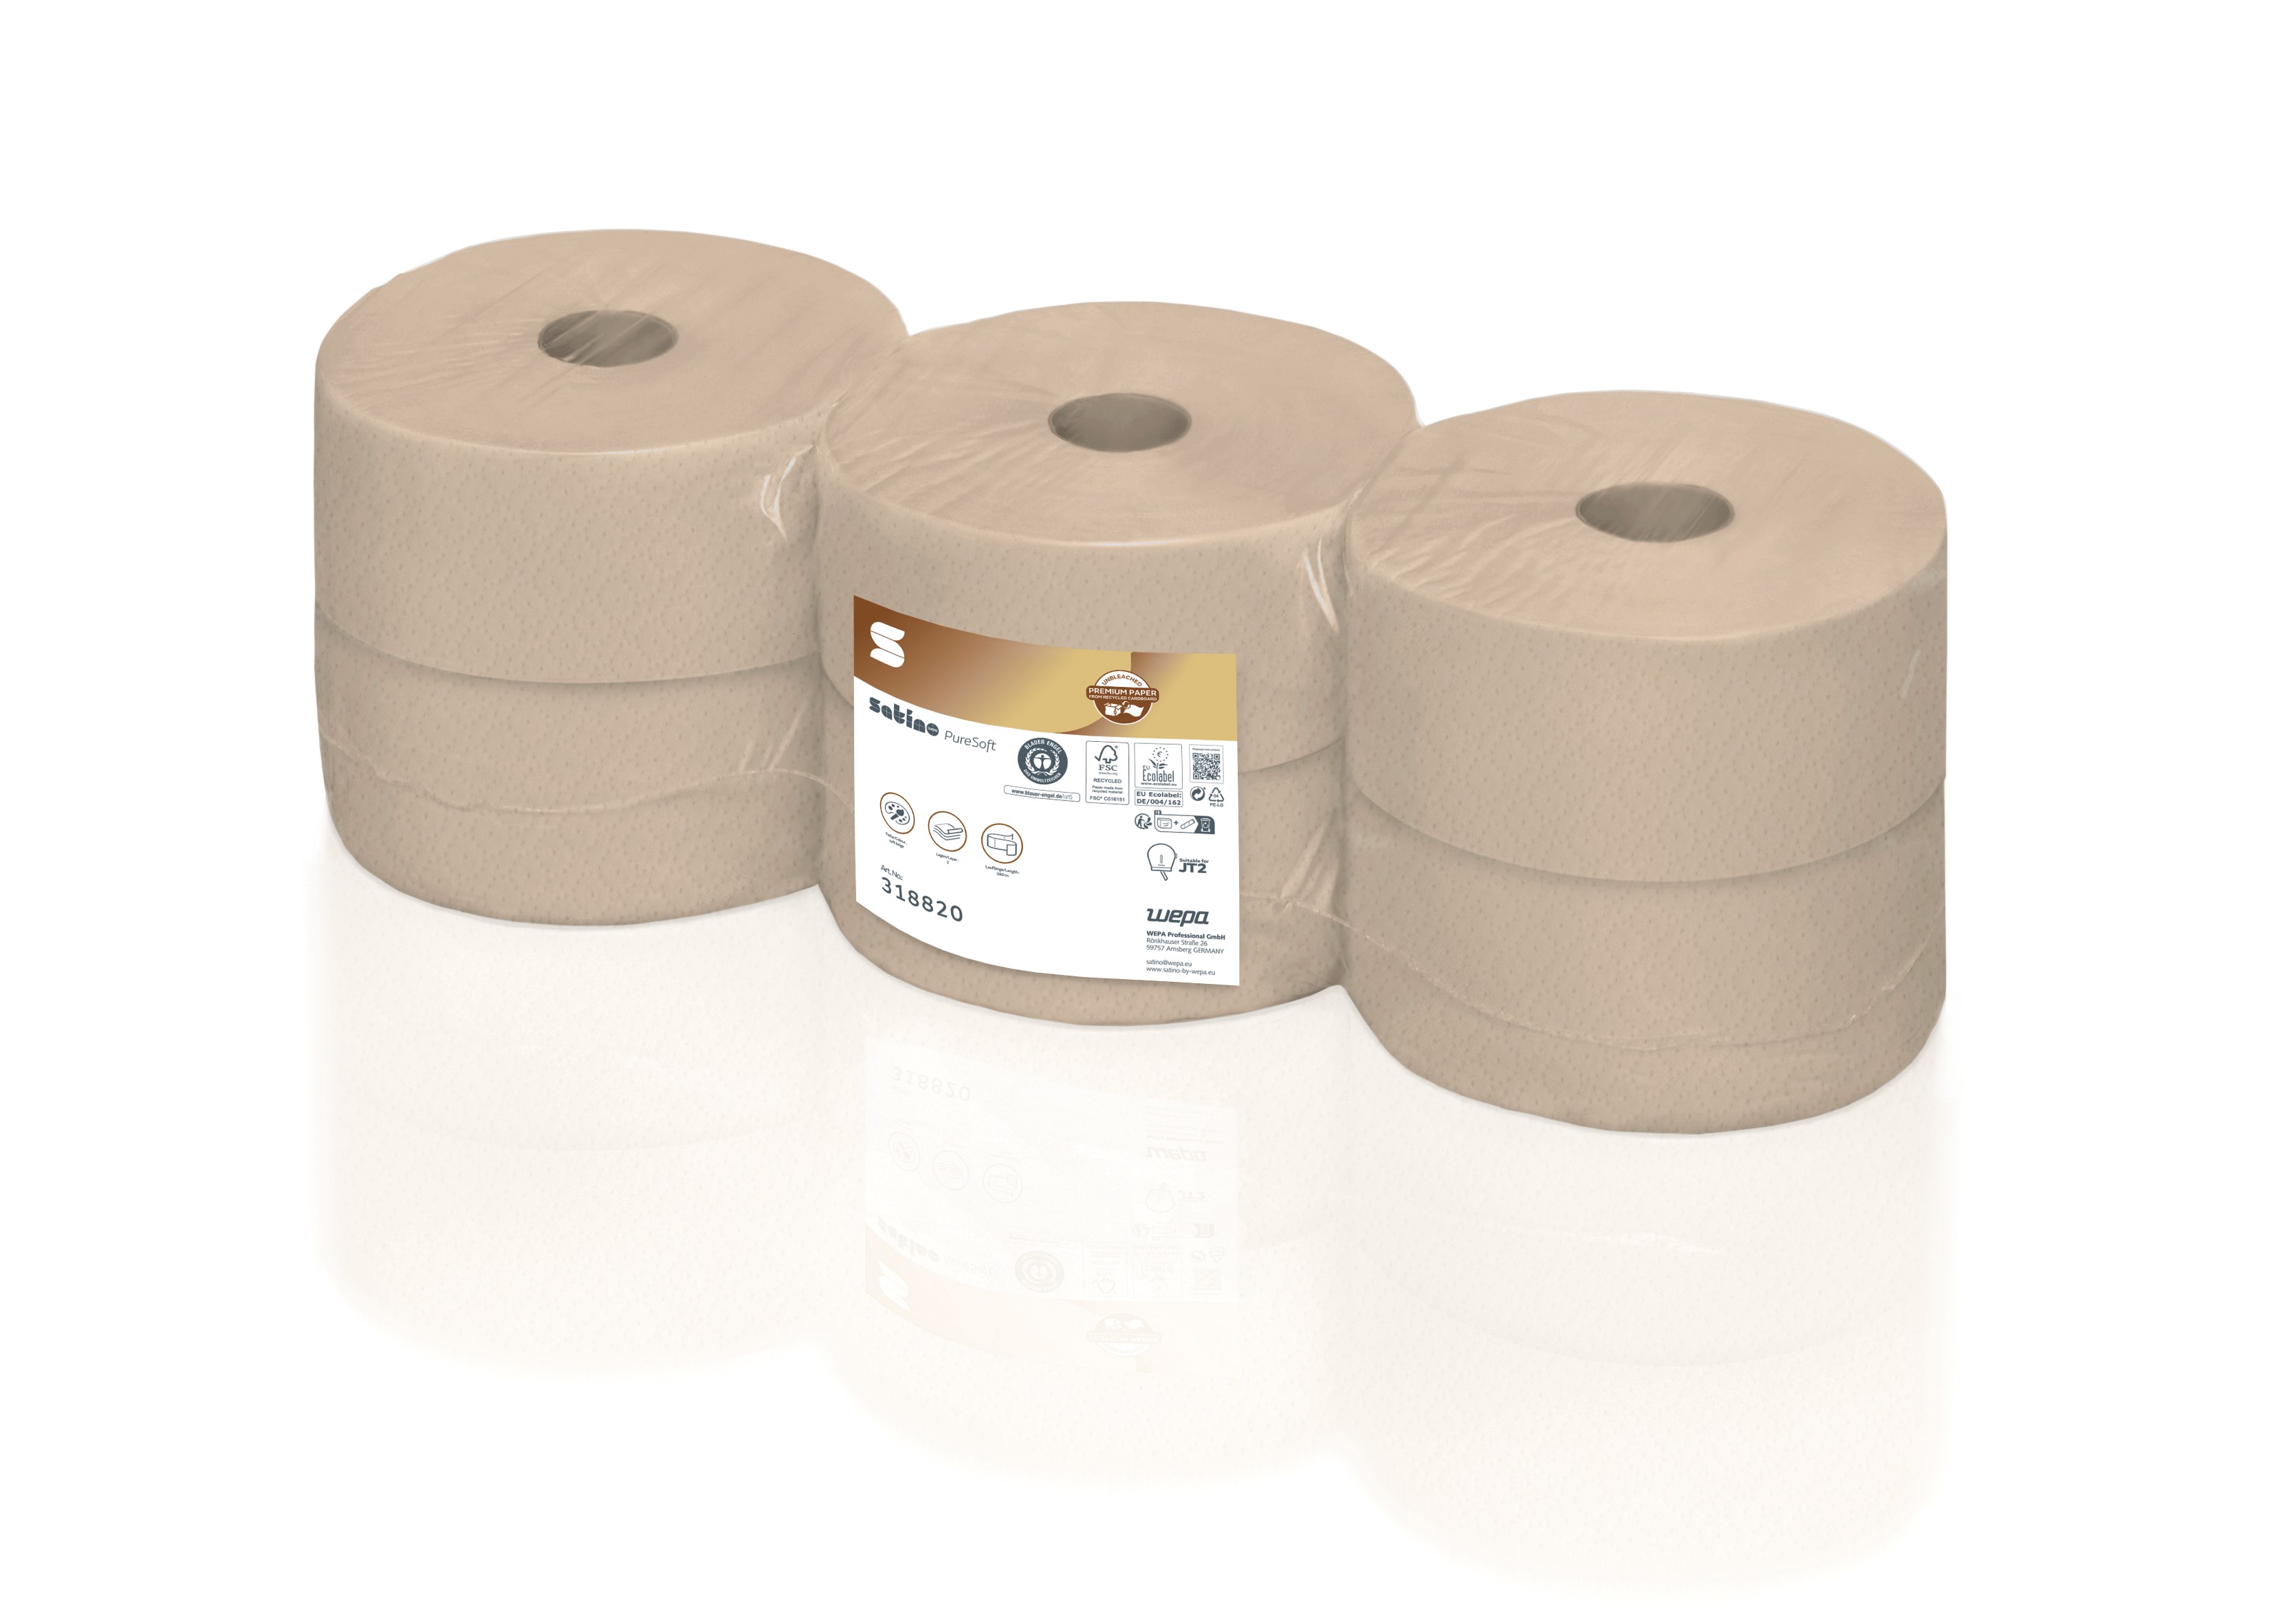 Produktbild: Toilettenpapier 2 lg soft beige RC Jumbo satino  PureSoft 44 Pack (Palette)